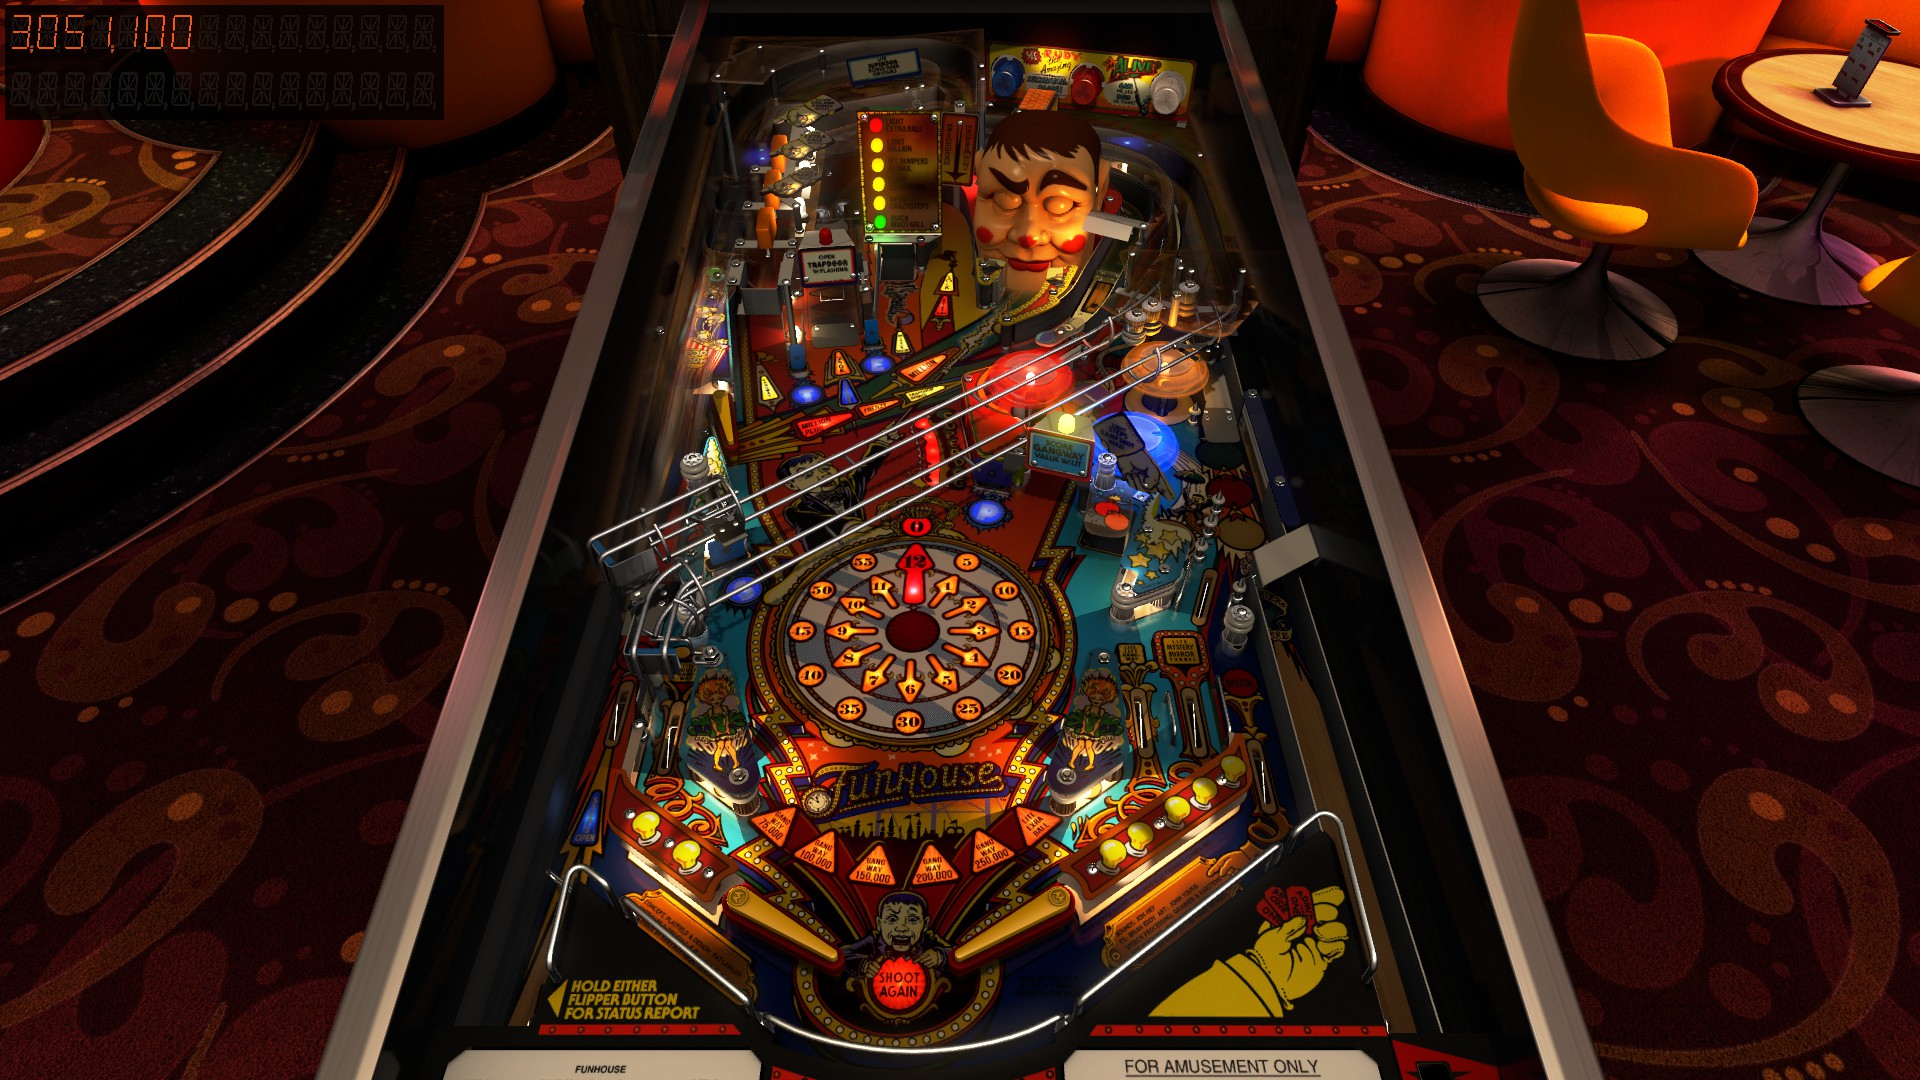 e2e4: Pinball FX3: Funhouse [Arcade] (PC) 3,051,100 points on 2022-09-21 22:03:52